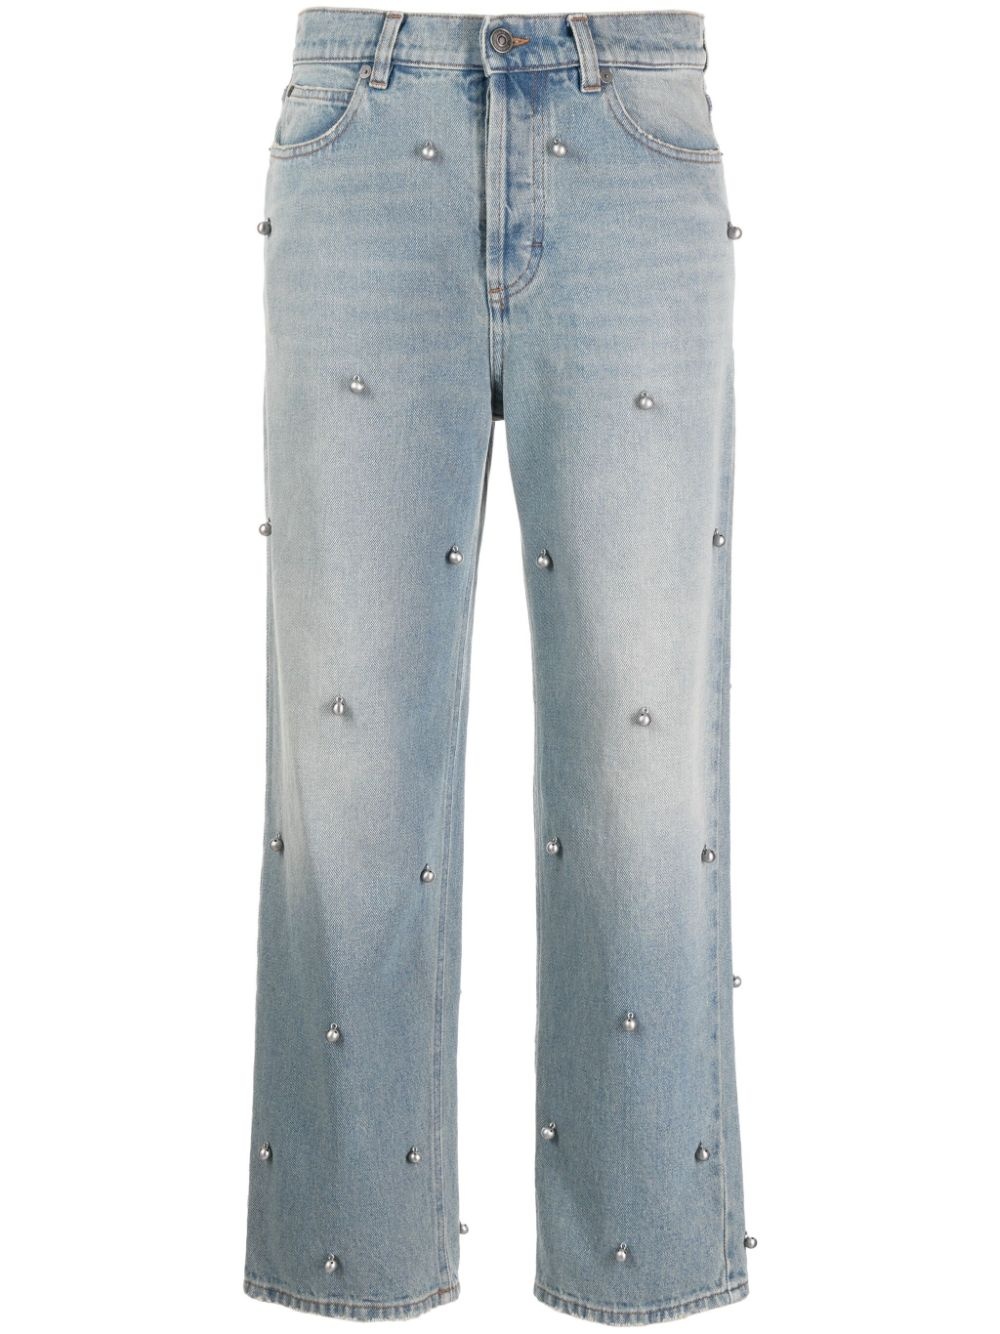 bell-emgellished indigo-wash jeans - 1